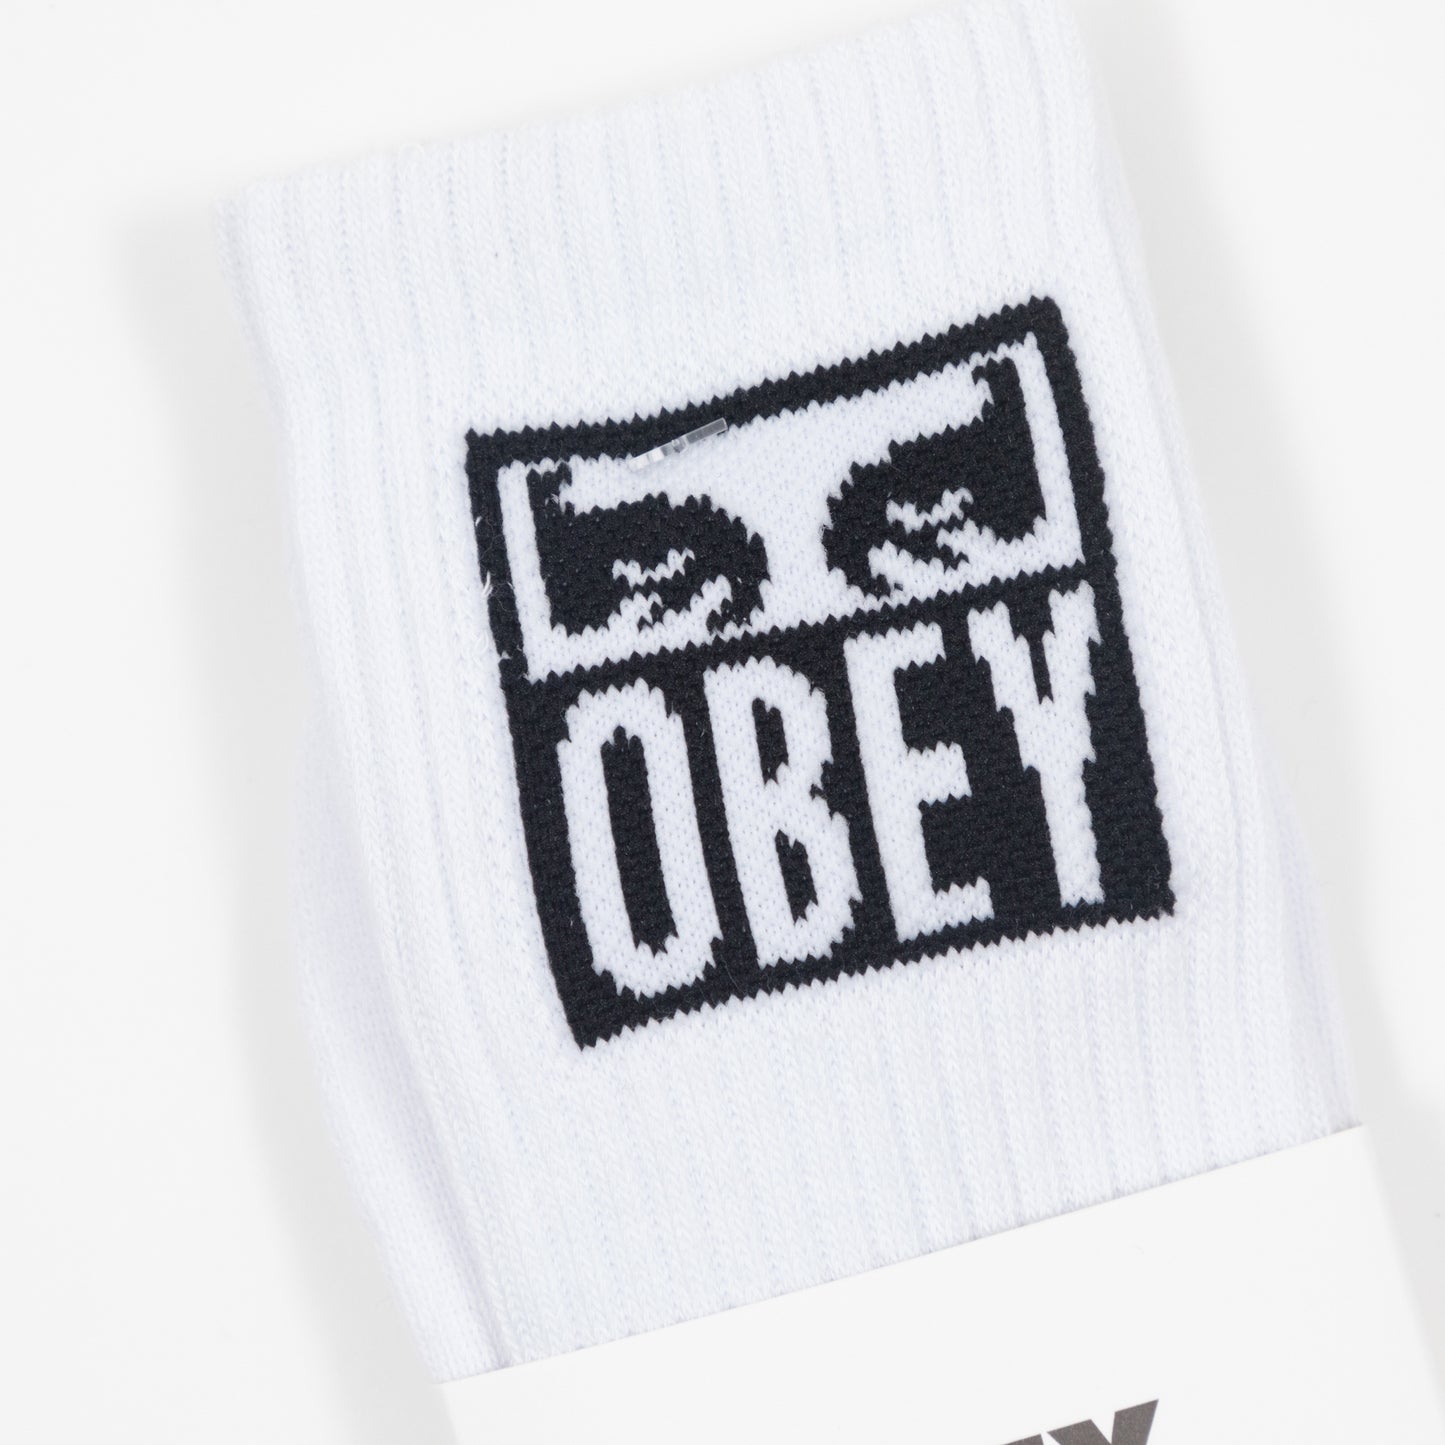 OBEY Eyes Icon Socks in WHITE